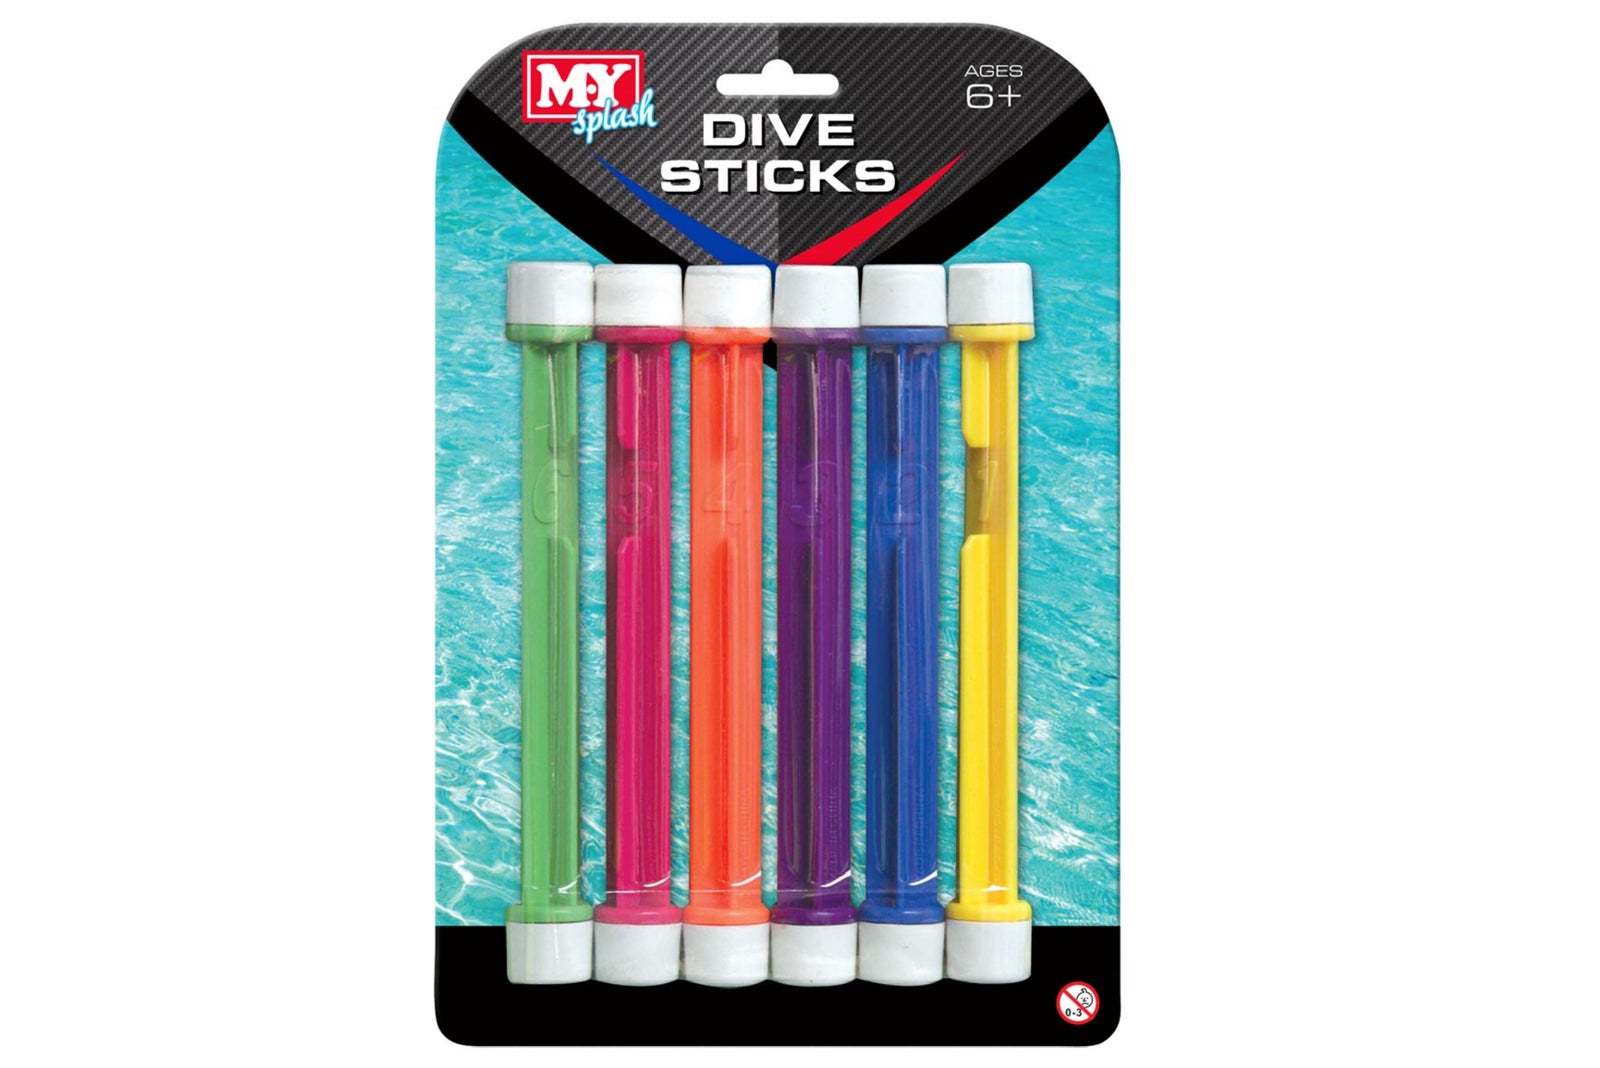 Dive Sticks